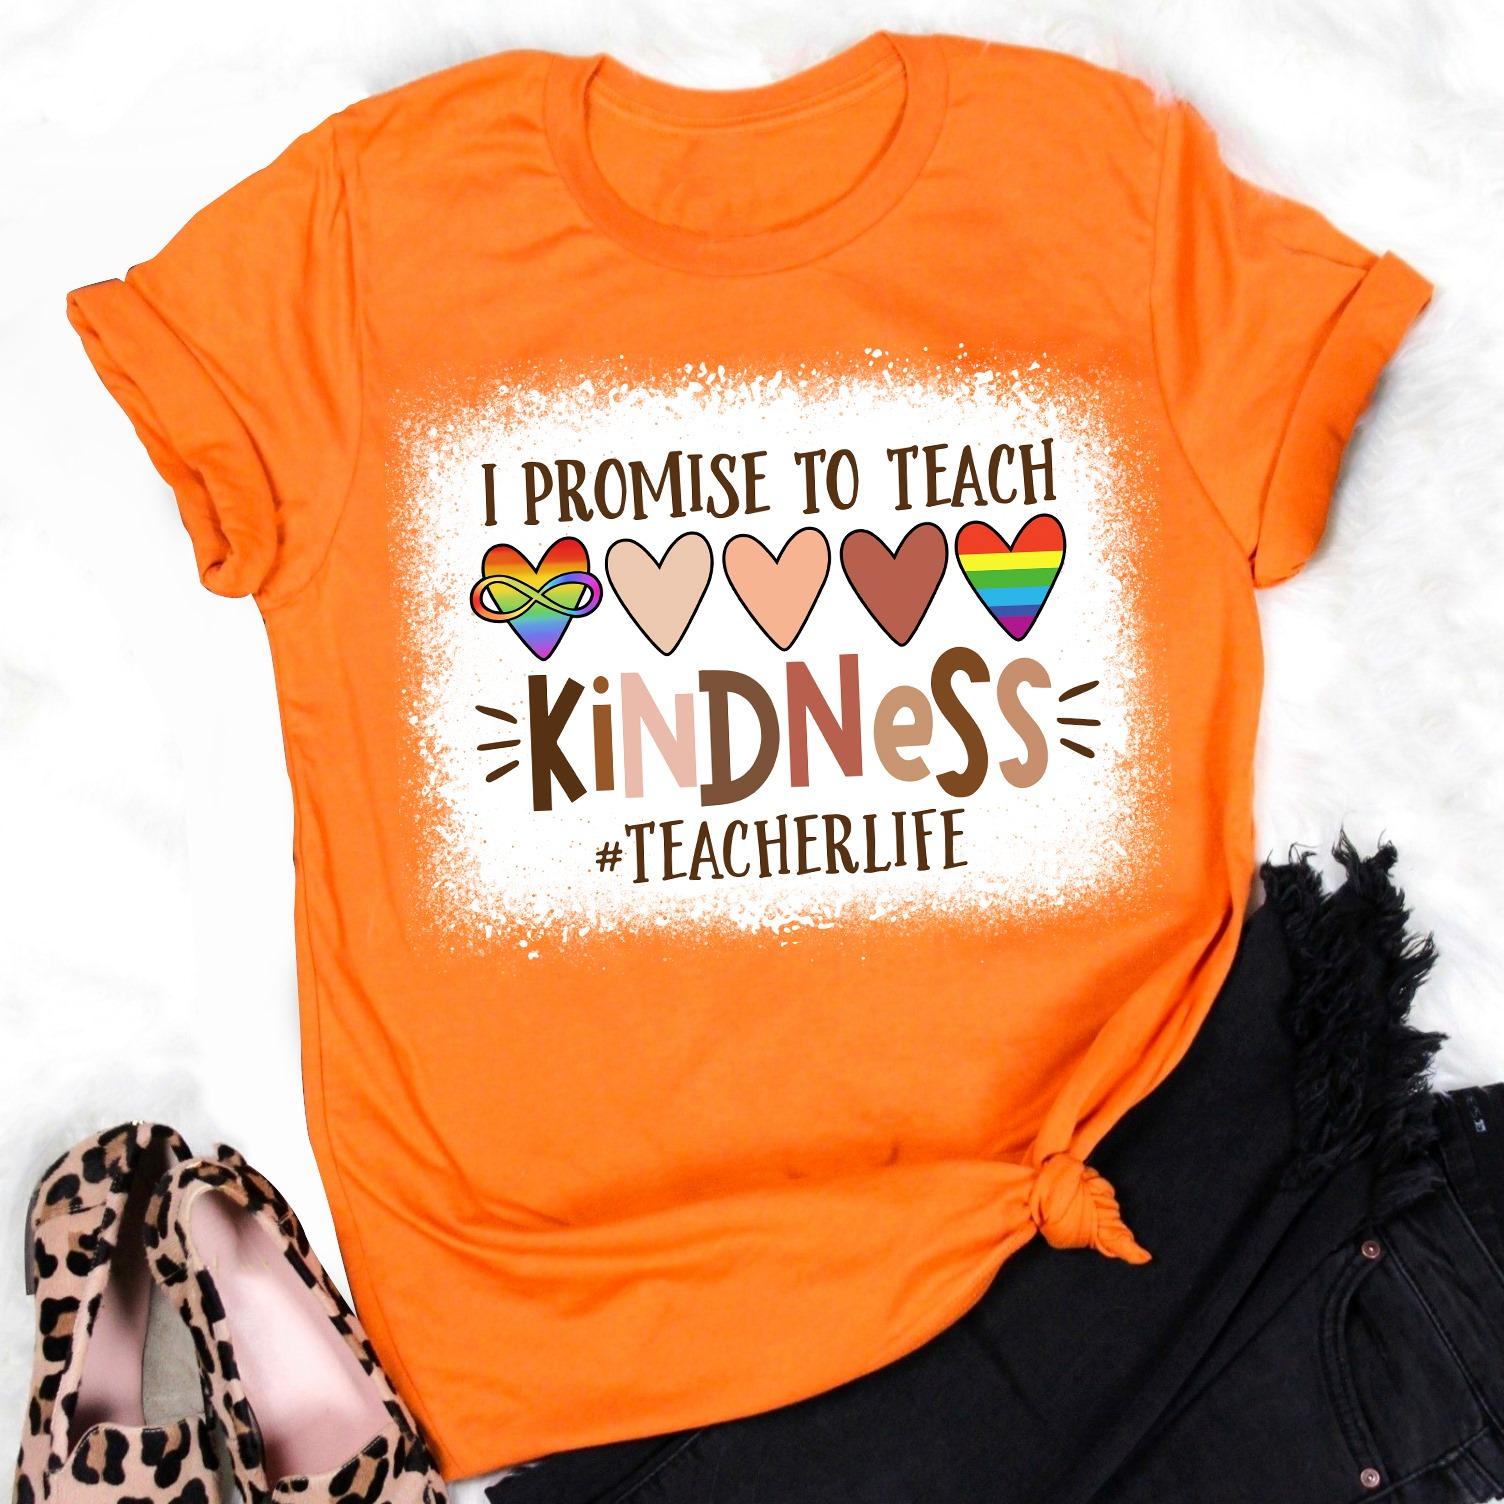 I promise to teach kindness - Lgbt community, black community, teacher life, T-shirt for teacher